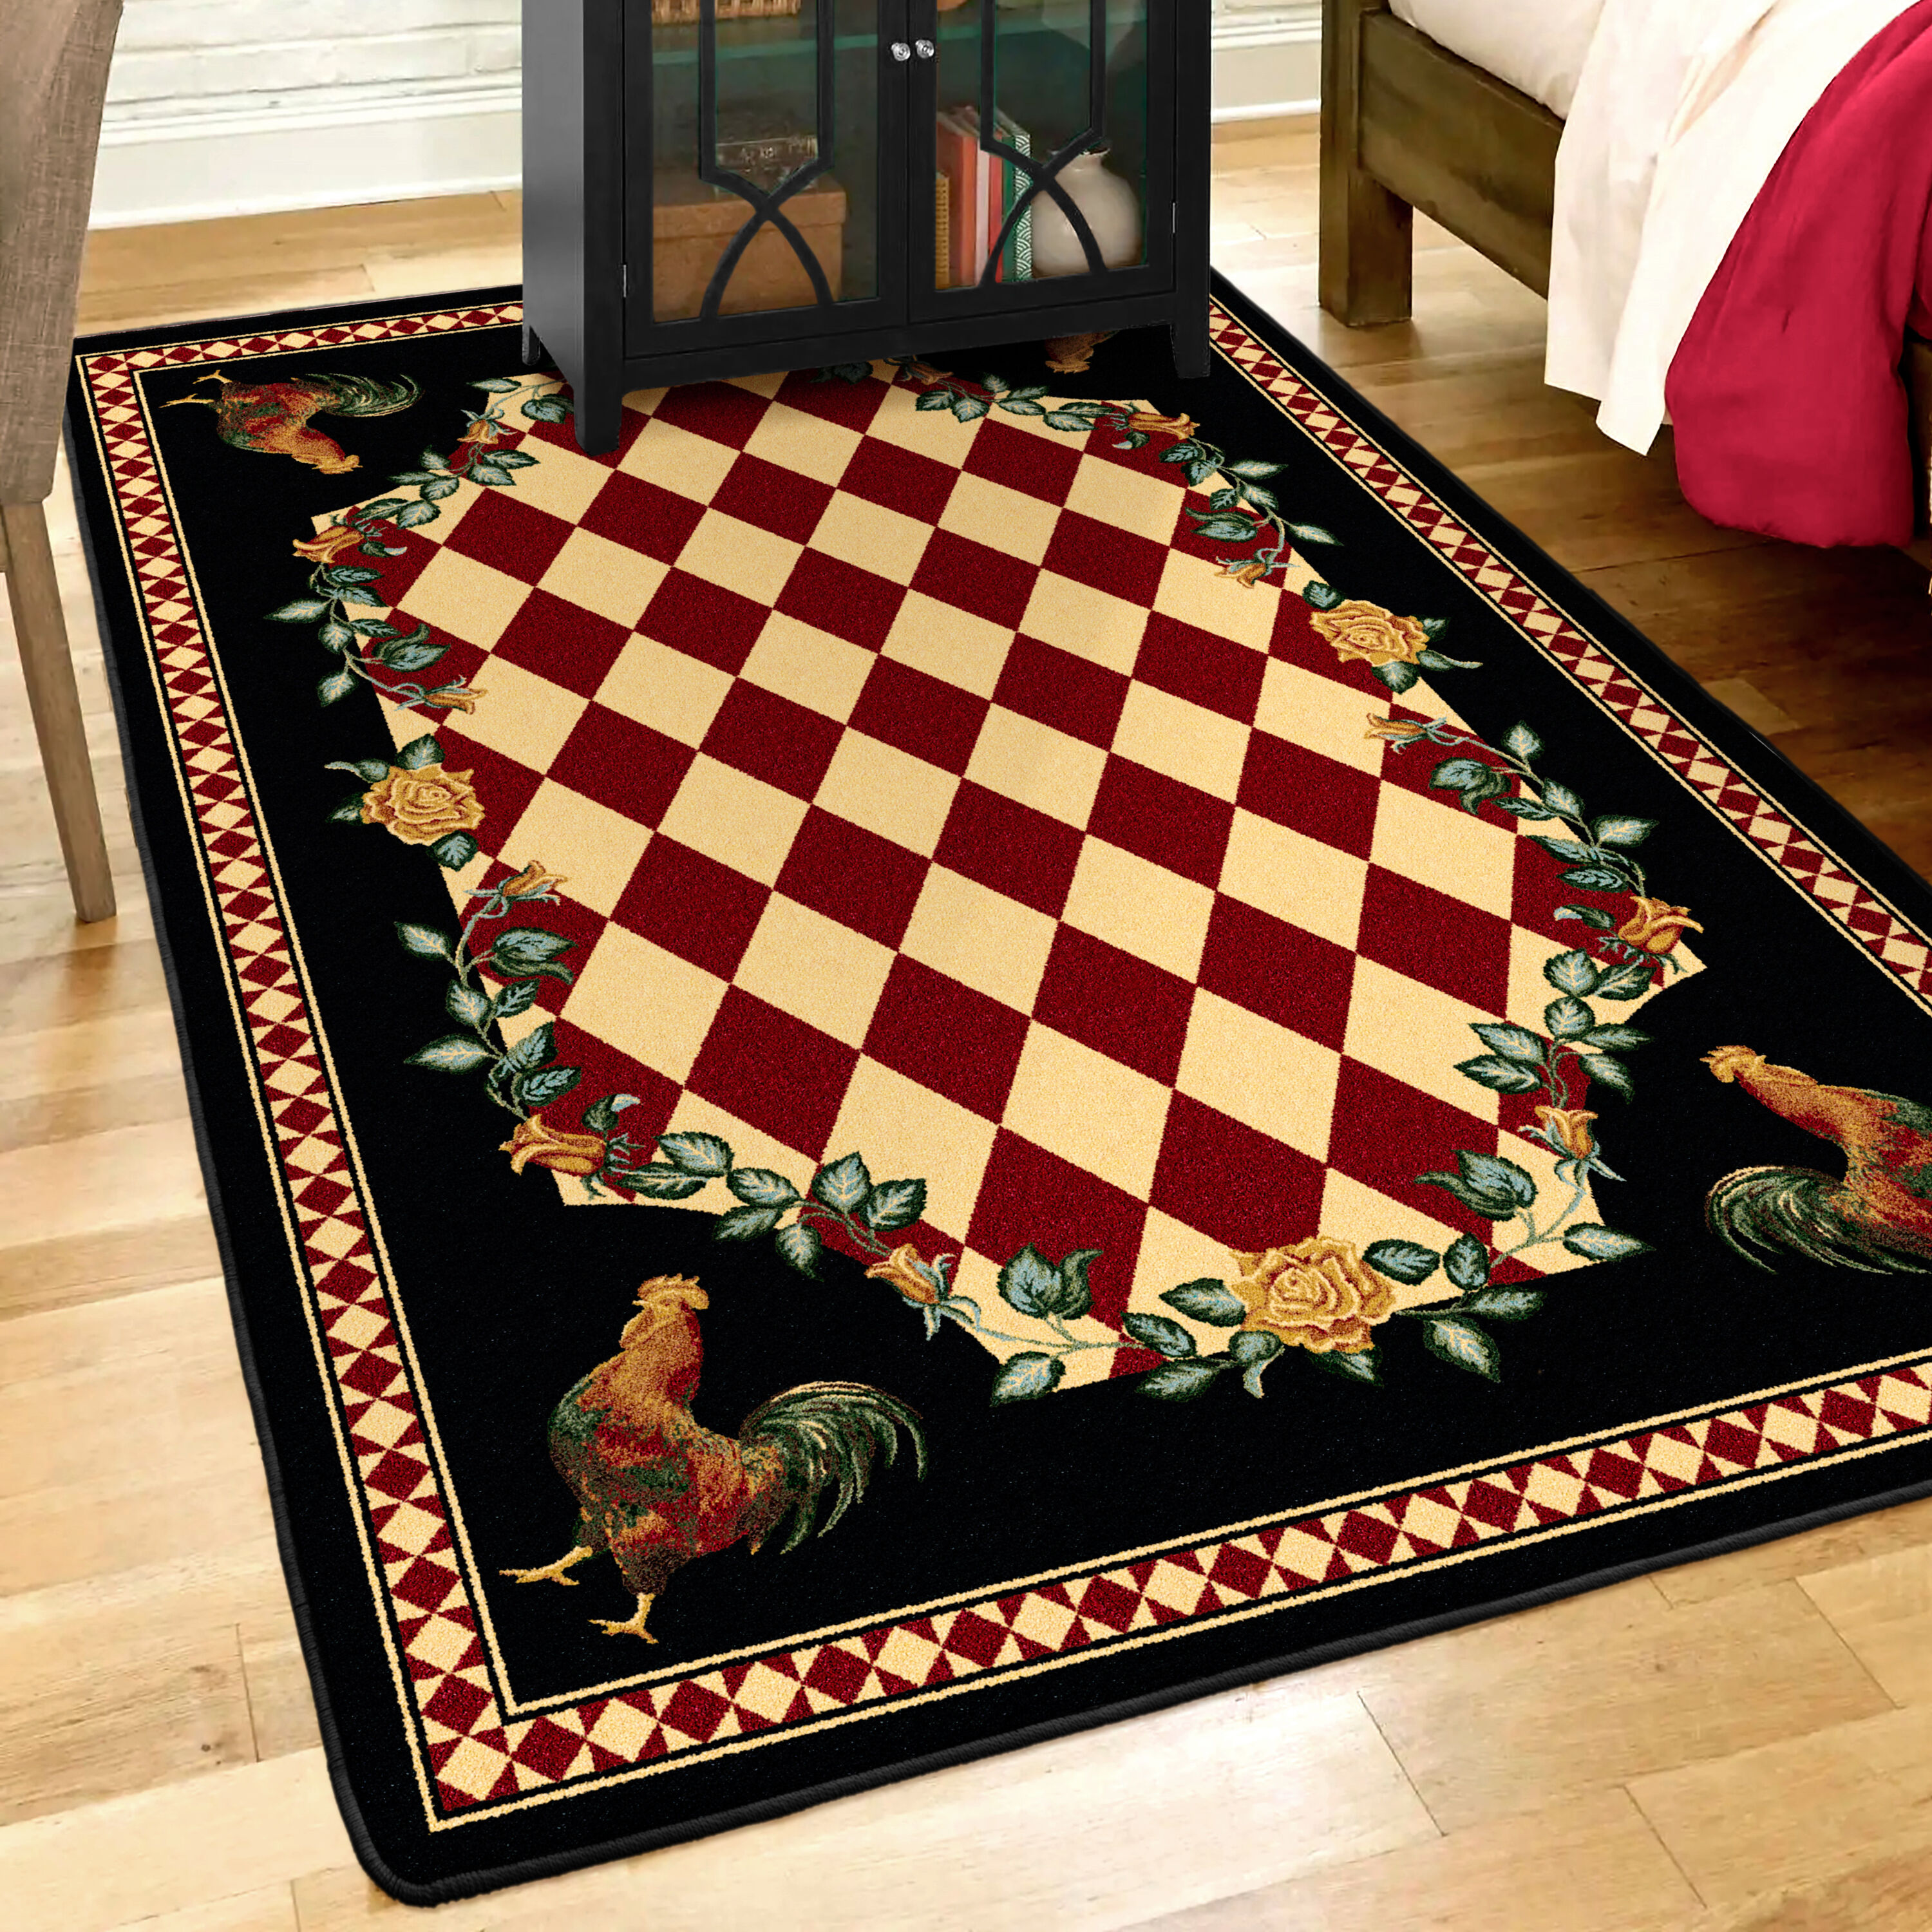 4x5 rug size